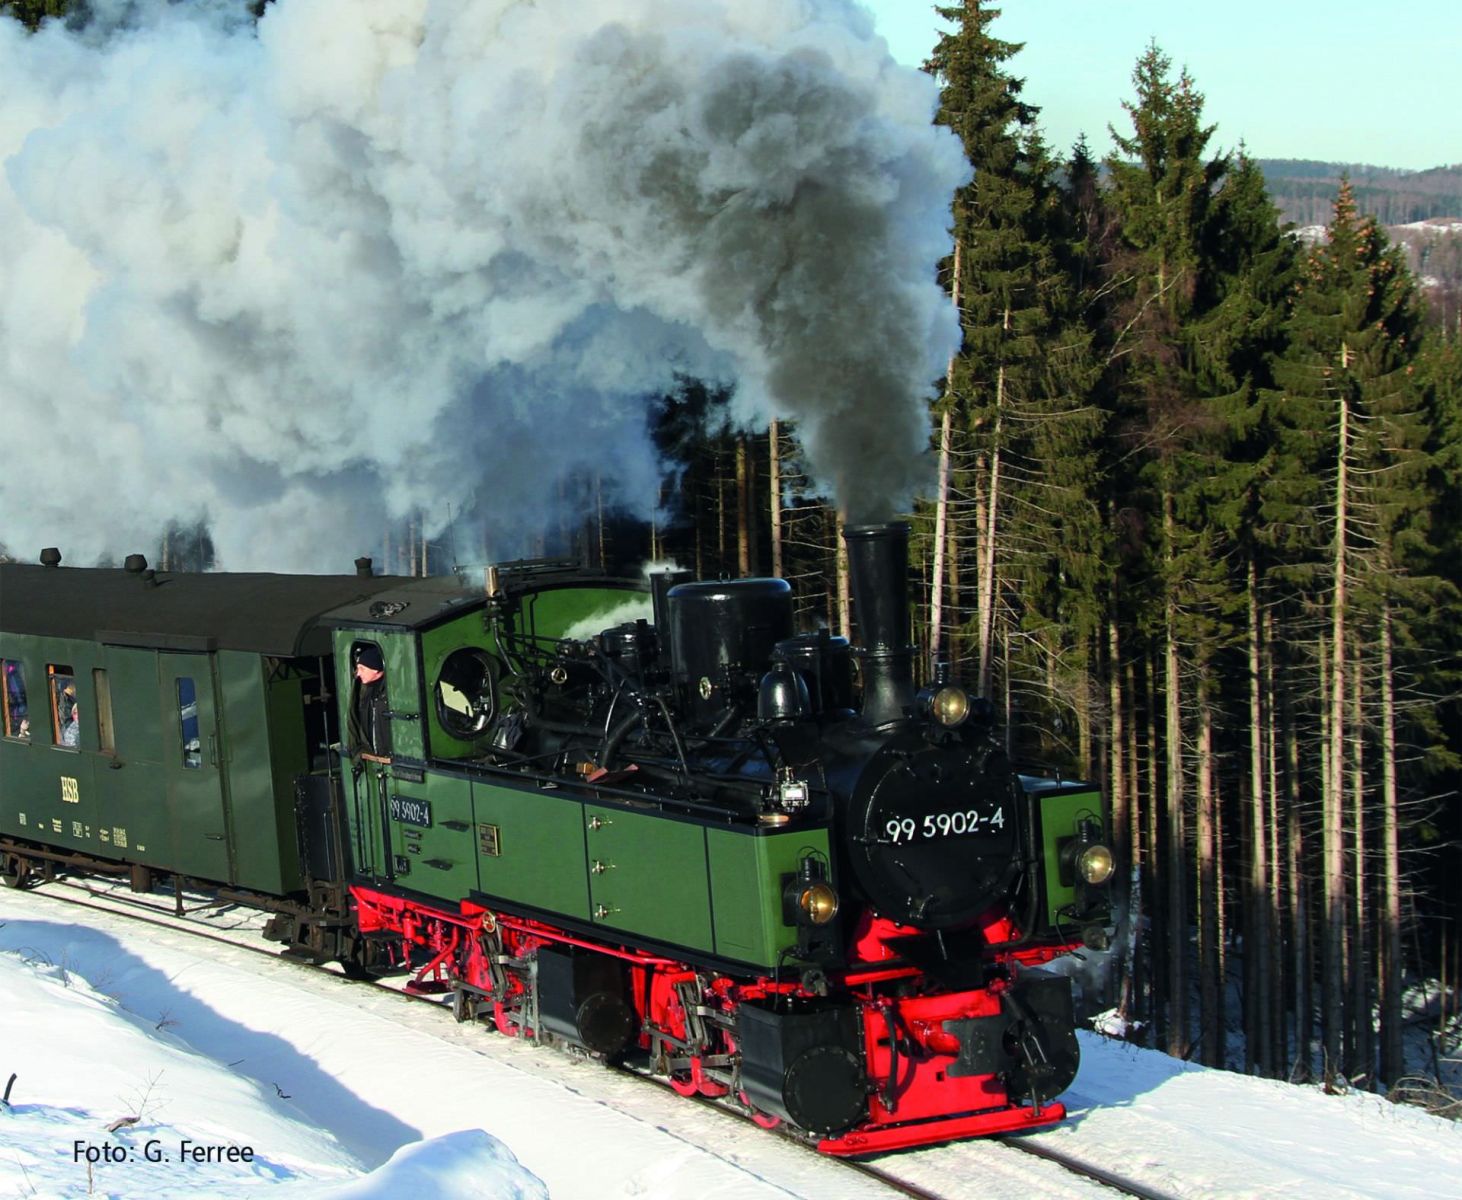 Dampflokomotive HSB